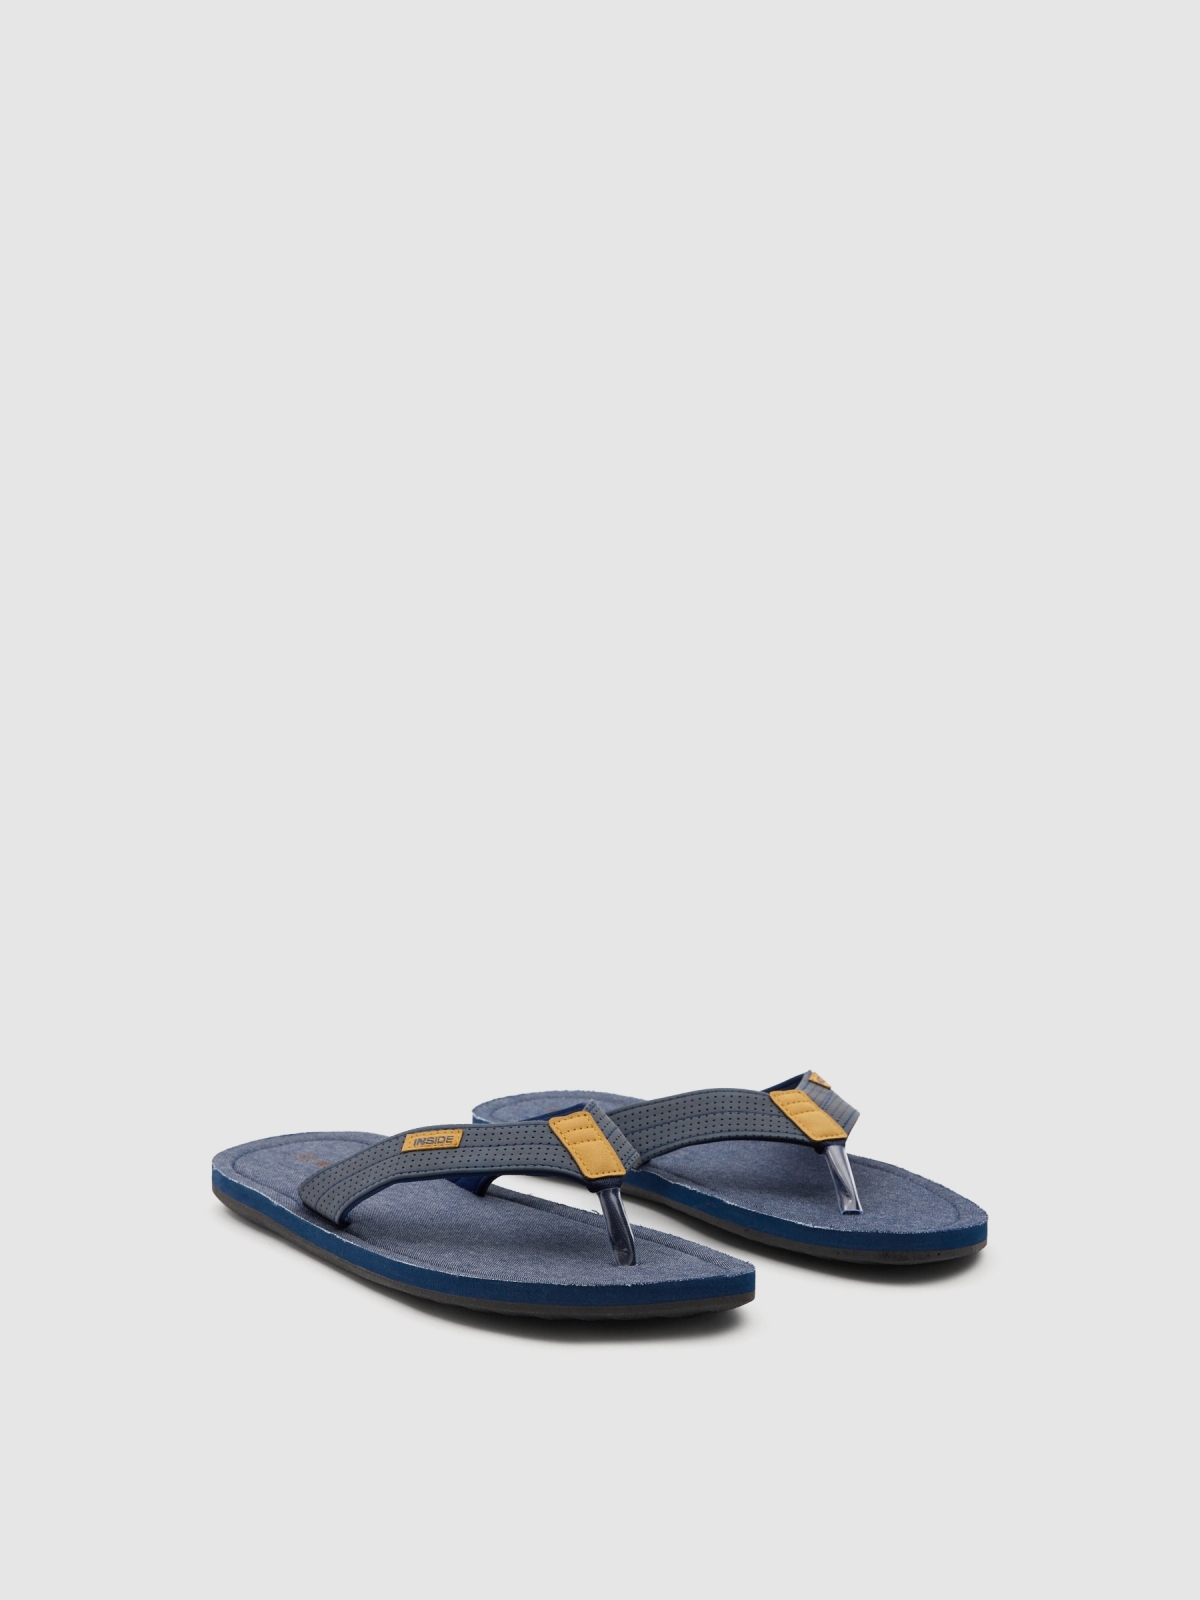 Sandalia topos azul marino vista frontal 45º